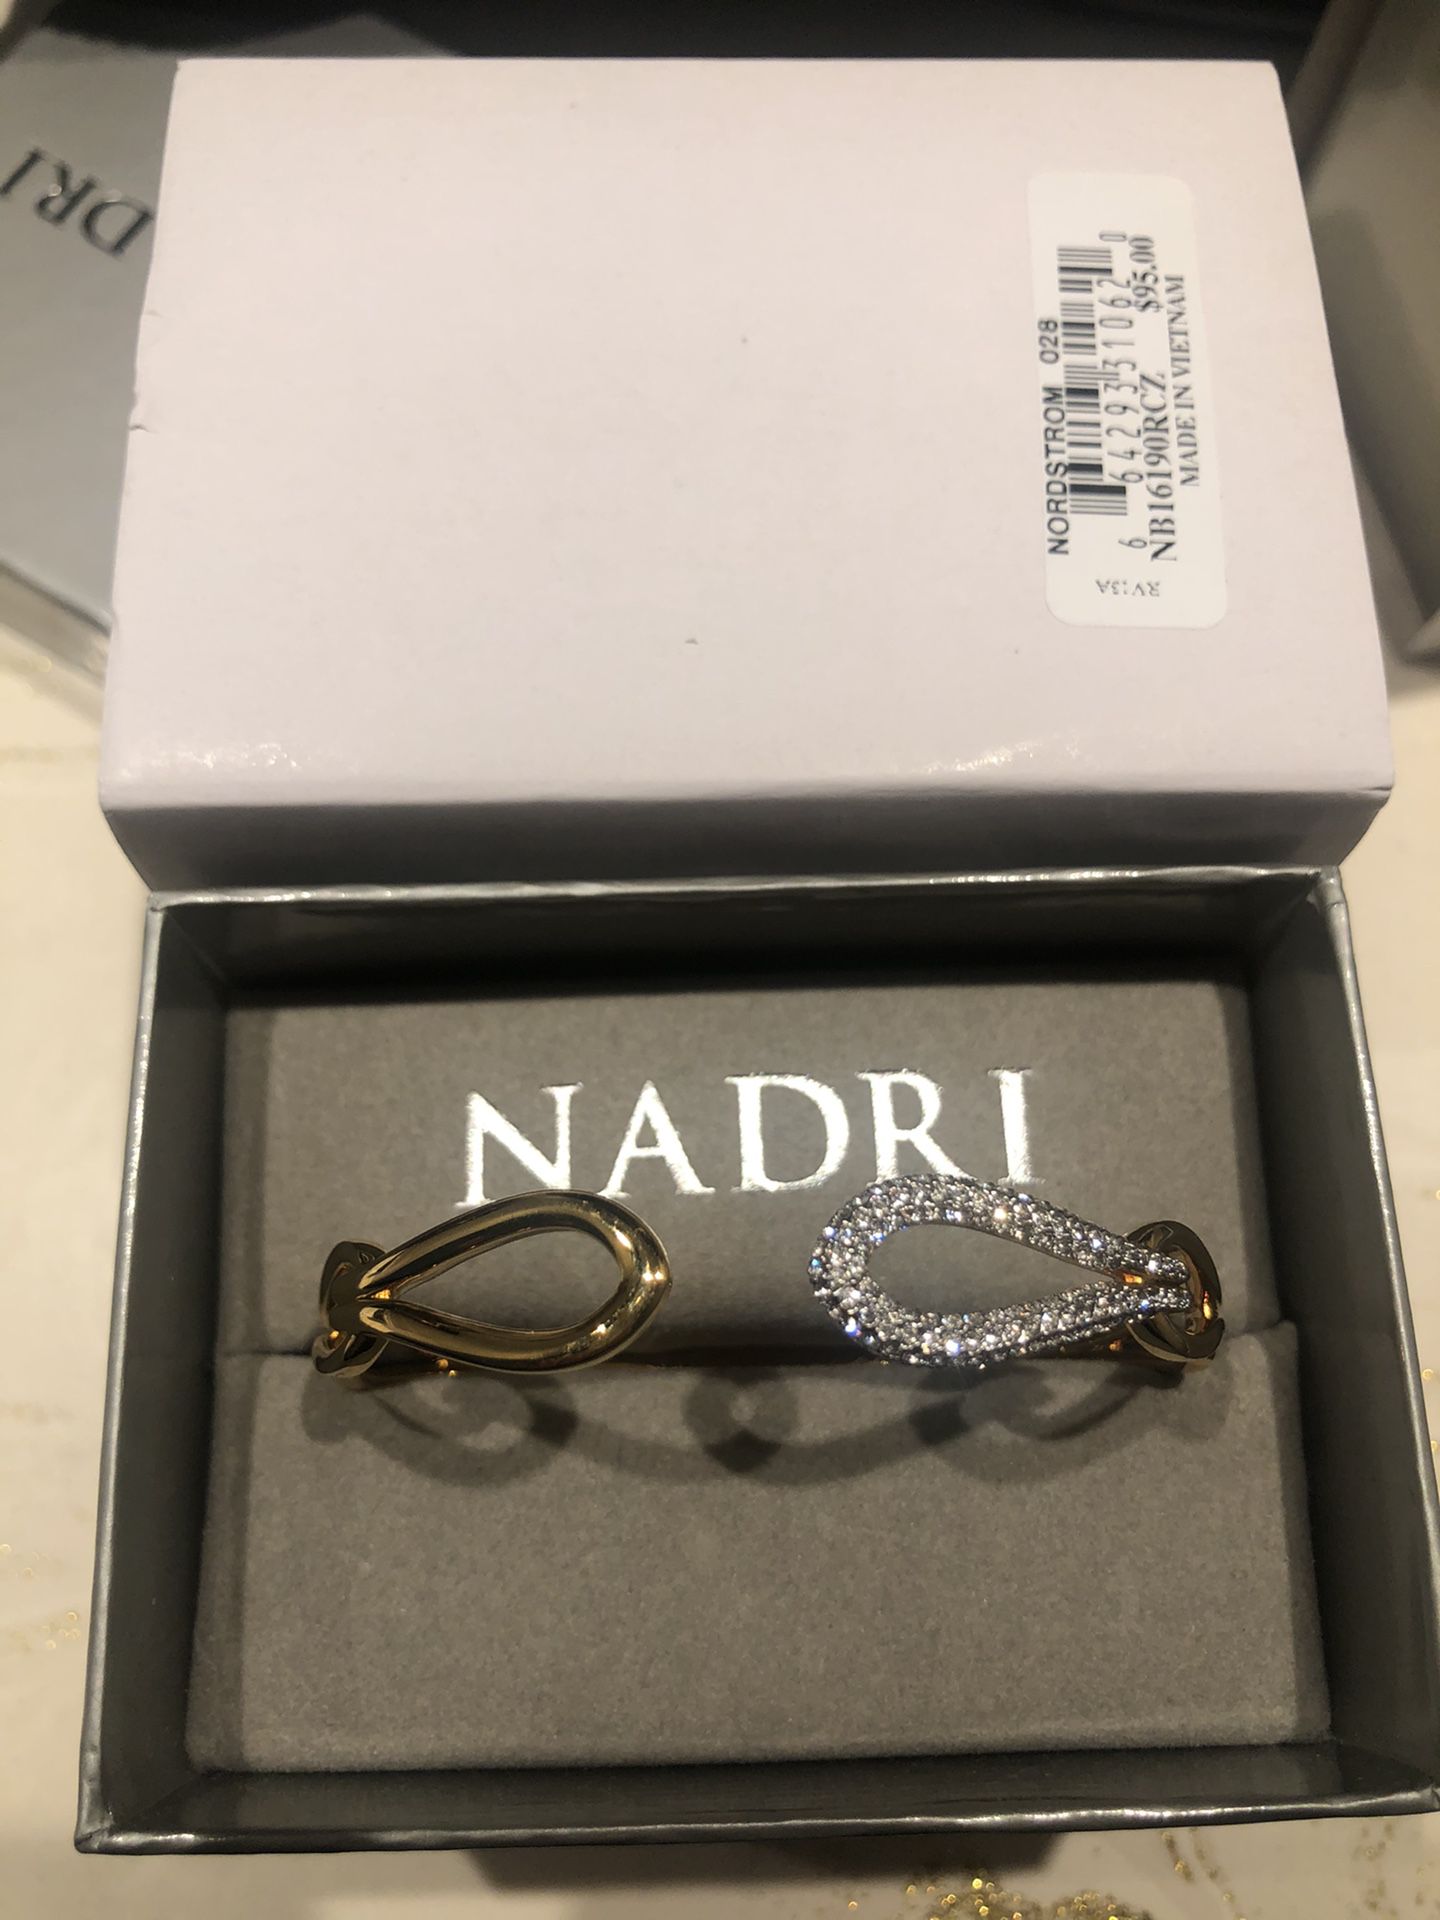 Nadri Gold and Crystal bangle